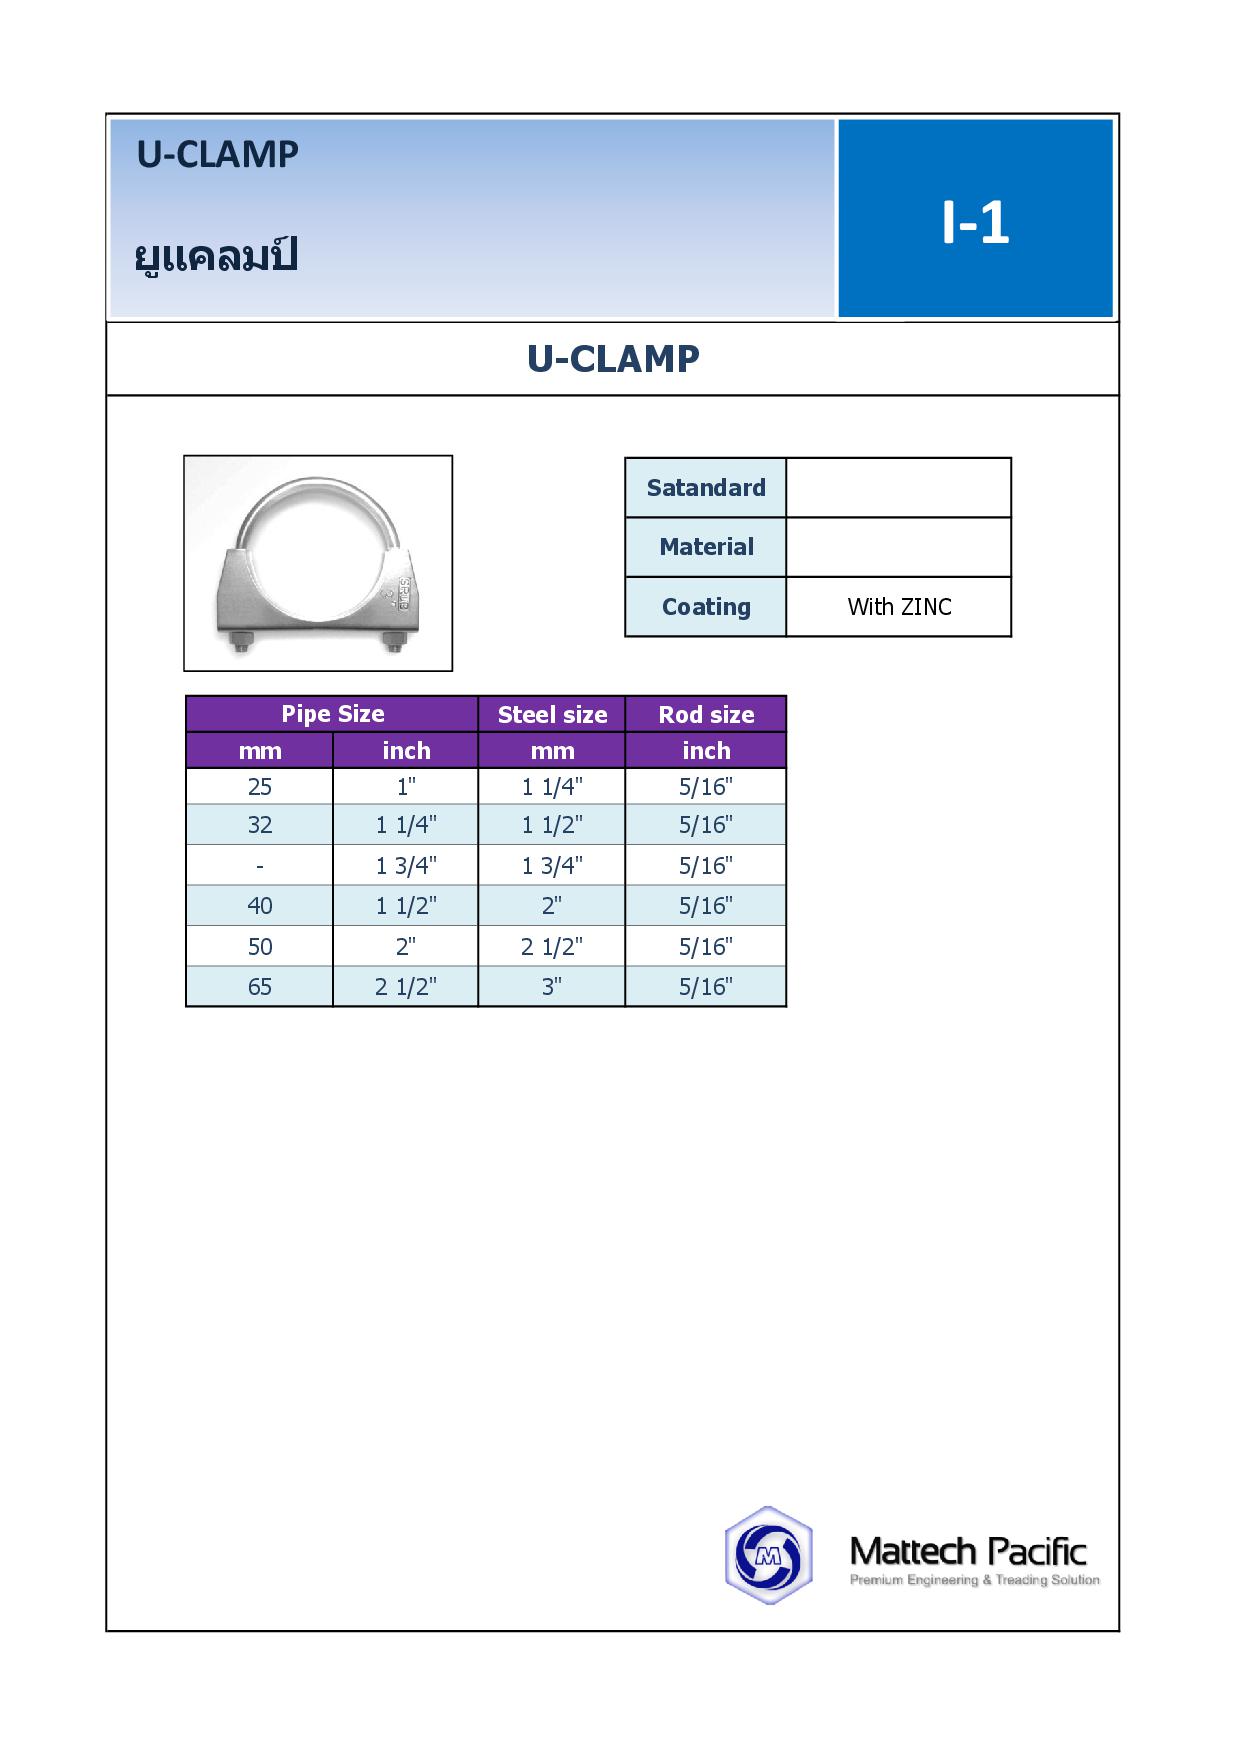 U-clamp